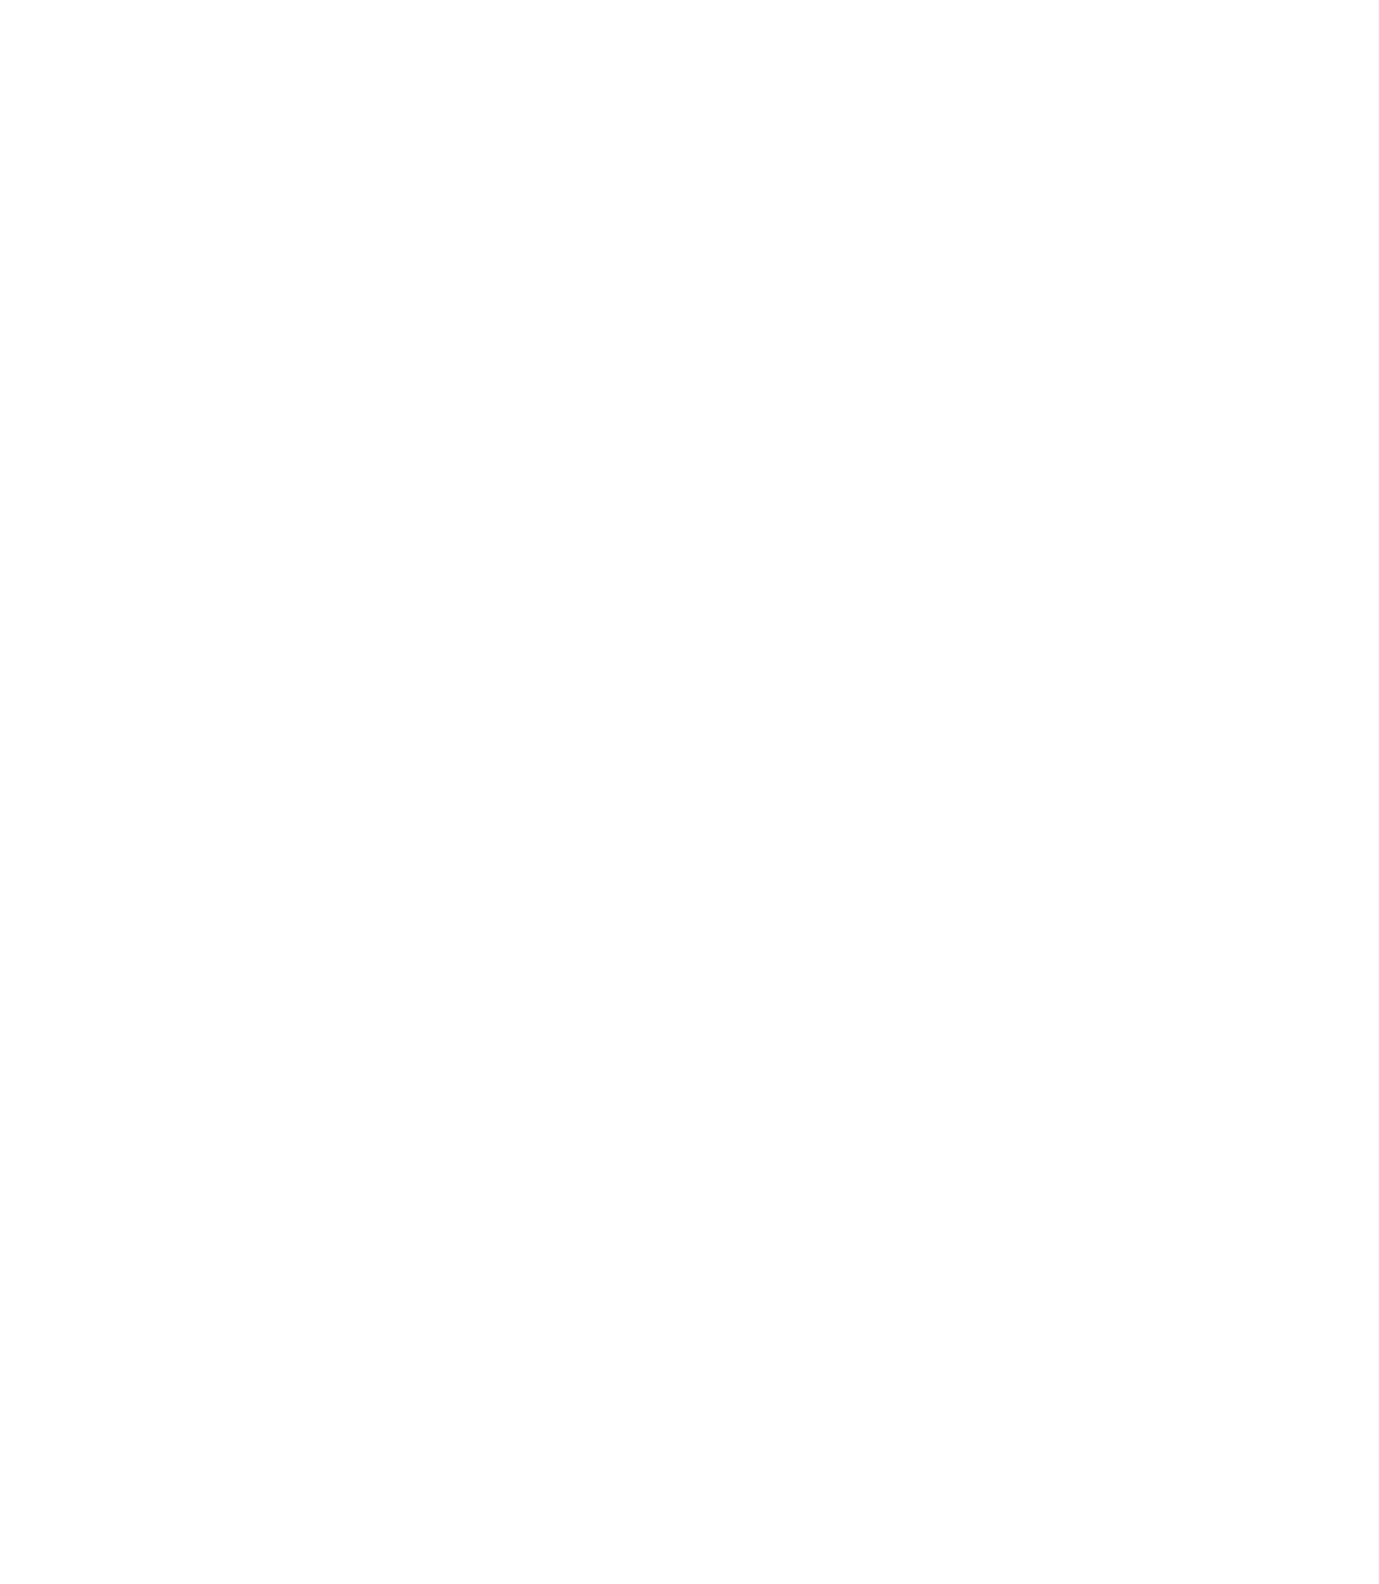 ProShares logo pour fonds sombres (PNG transparent)